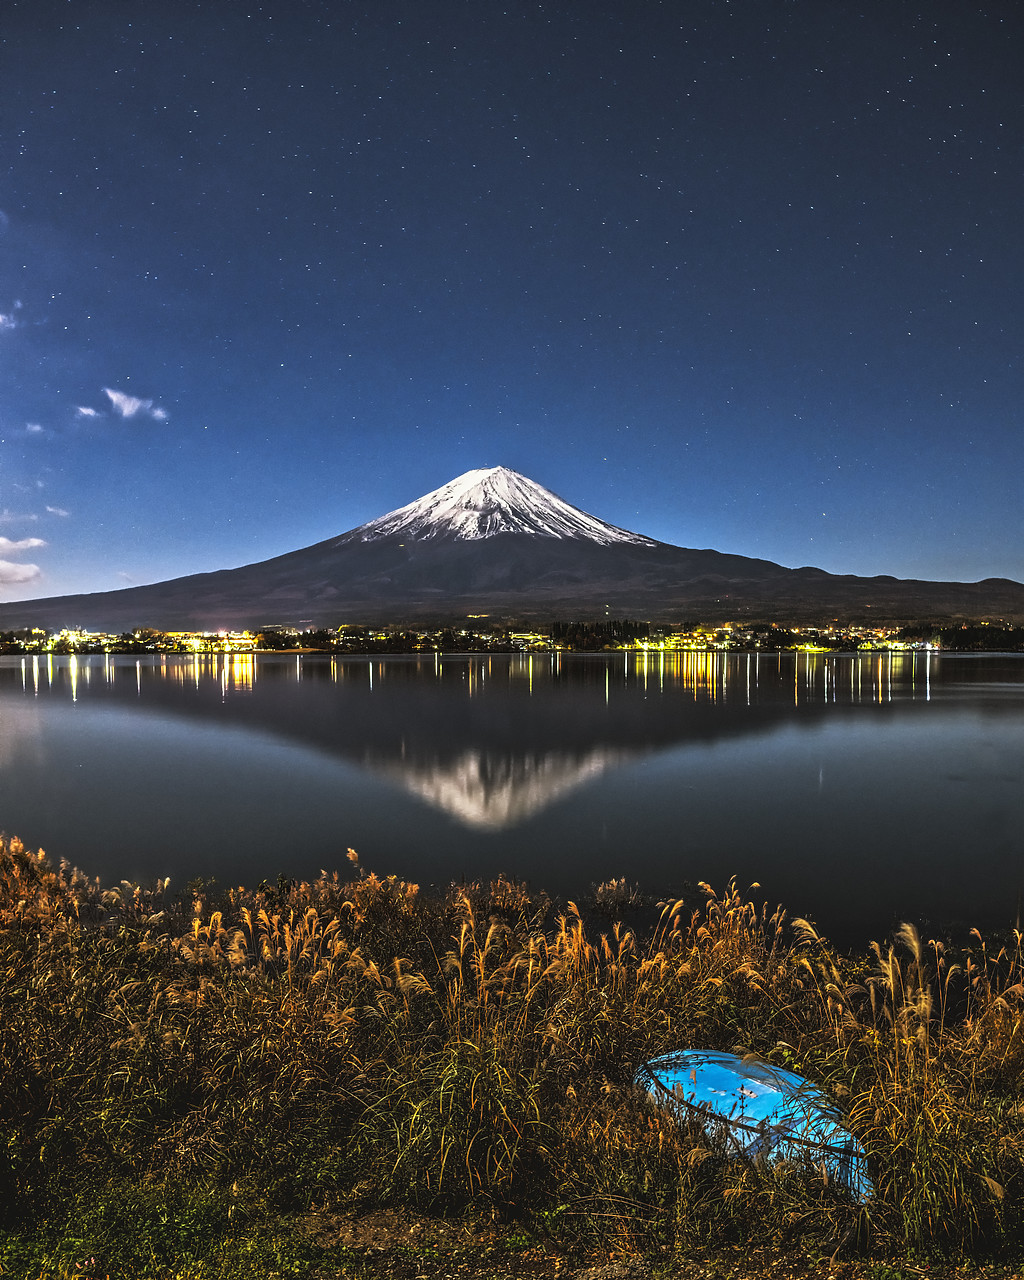 #190619-1 - Mt. Fuji at Night, Lake Kawaguchi, Fuji-Hakone, Japan